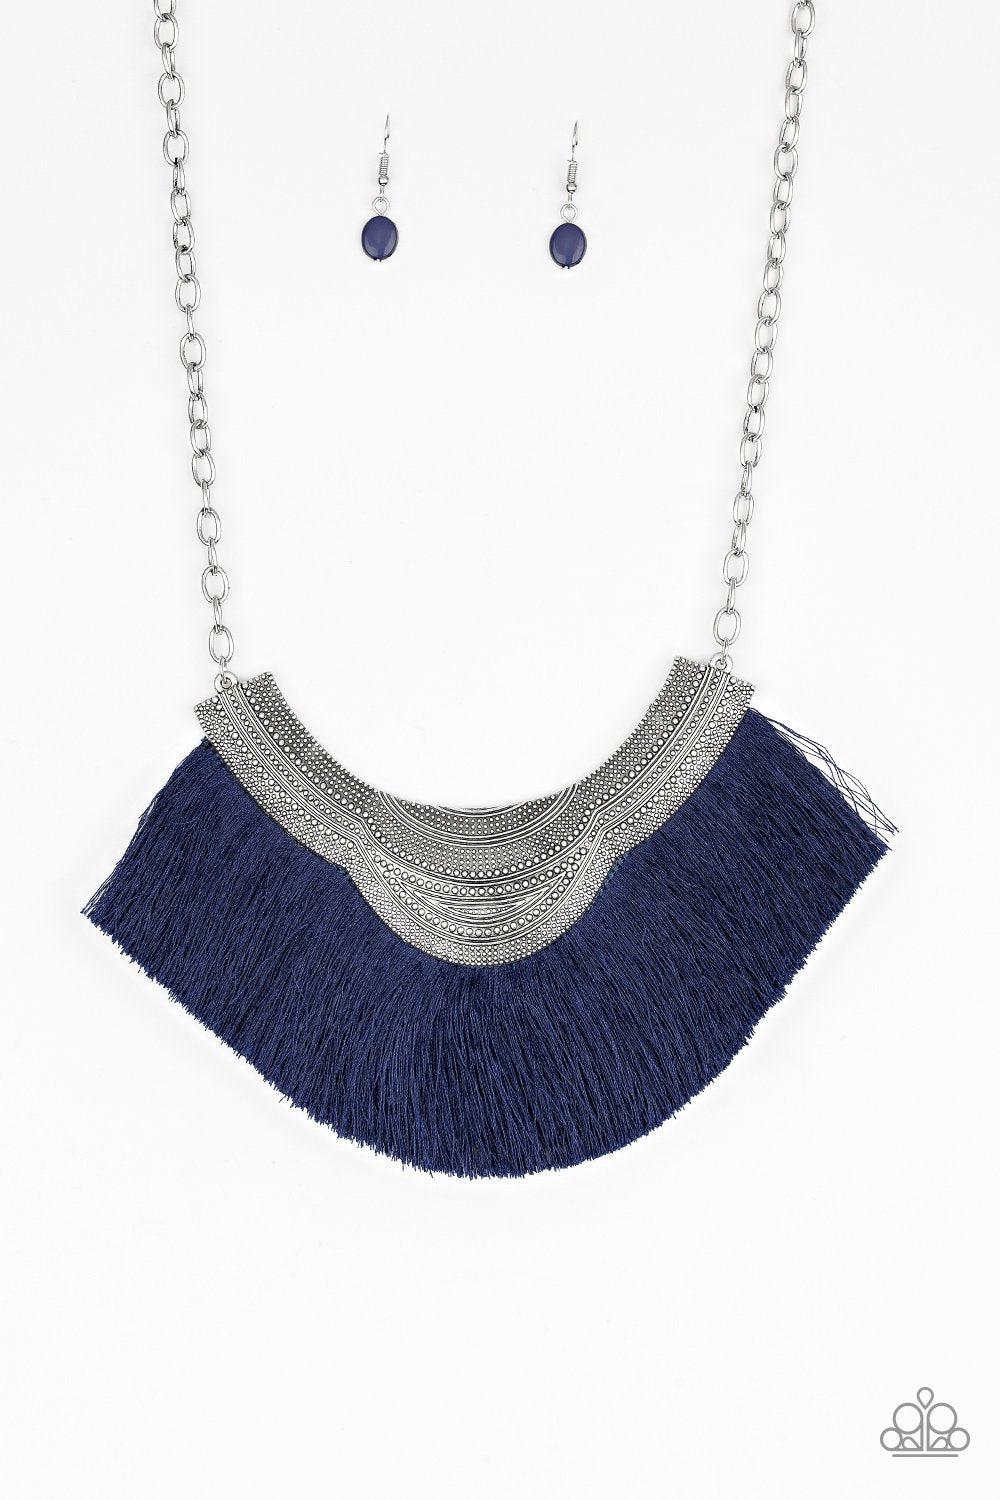 My Pharaoh Lady Dark Blue Fringe Necklace - Paparazzi Accessories-CarasShop.com - $5 Jewelry by Cara Jewels